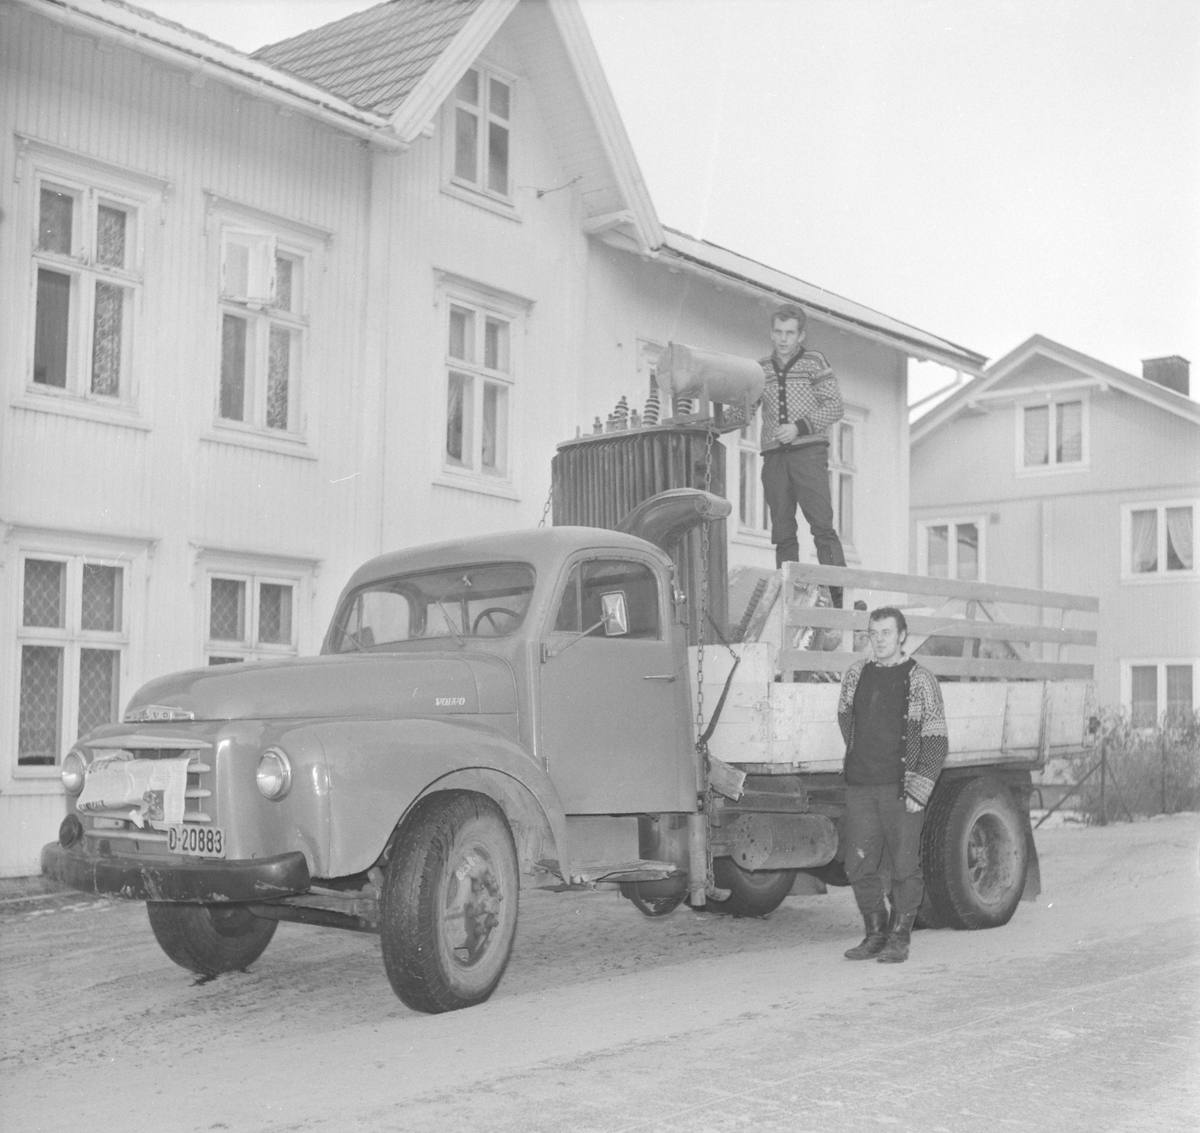 Harry Engen, lastebil Volvo D-20883 frakter transformator i Gamlegata. Brumunddal. 